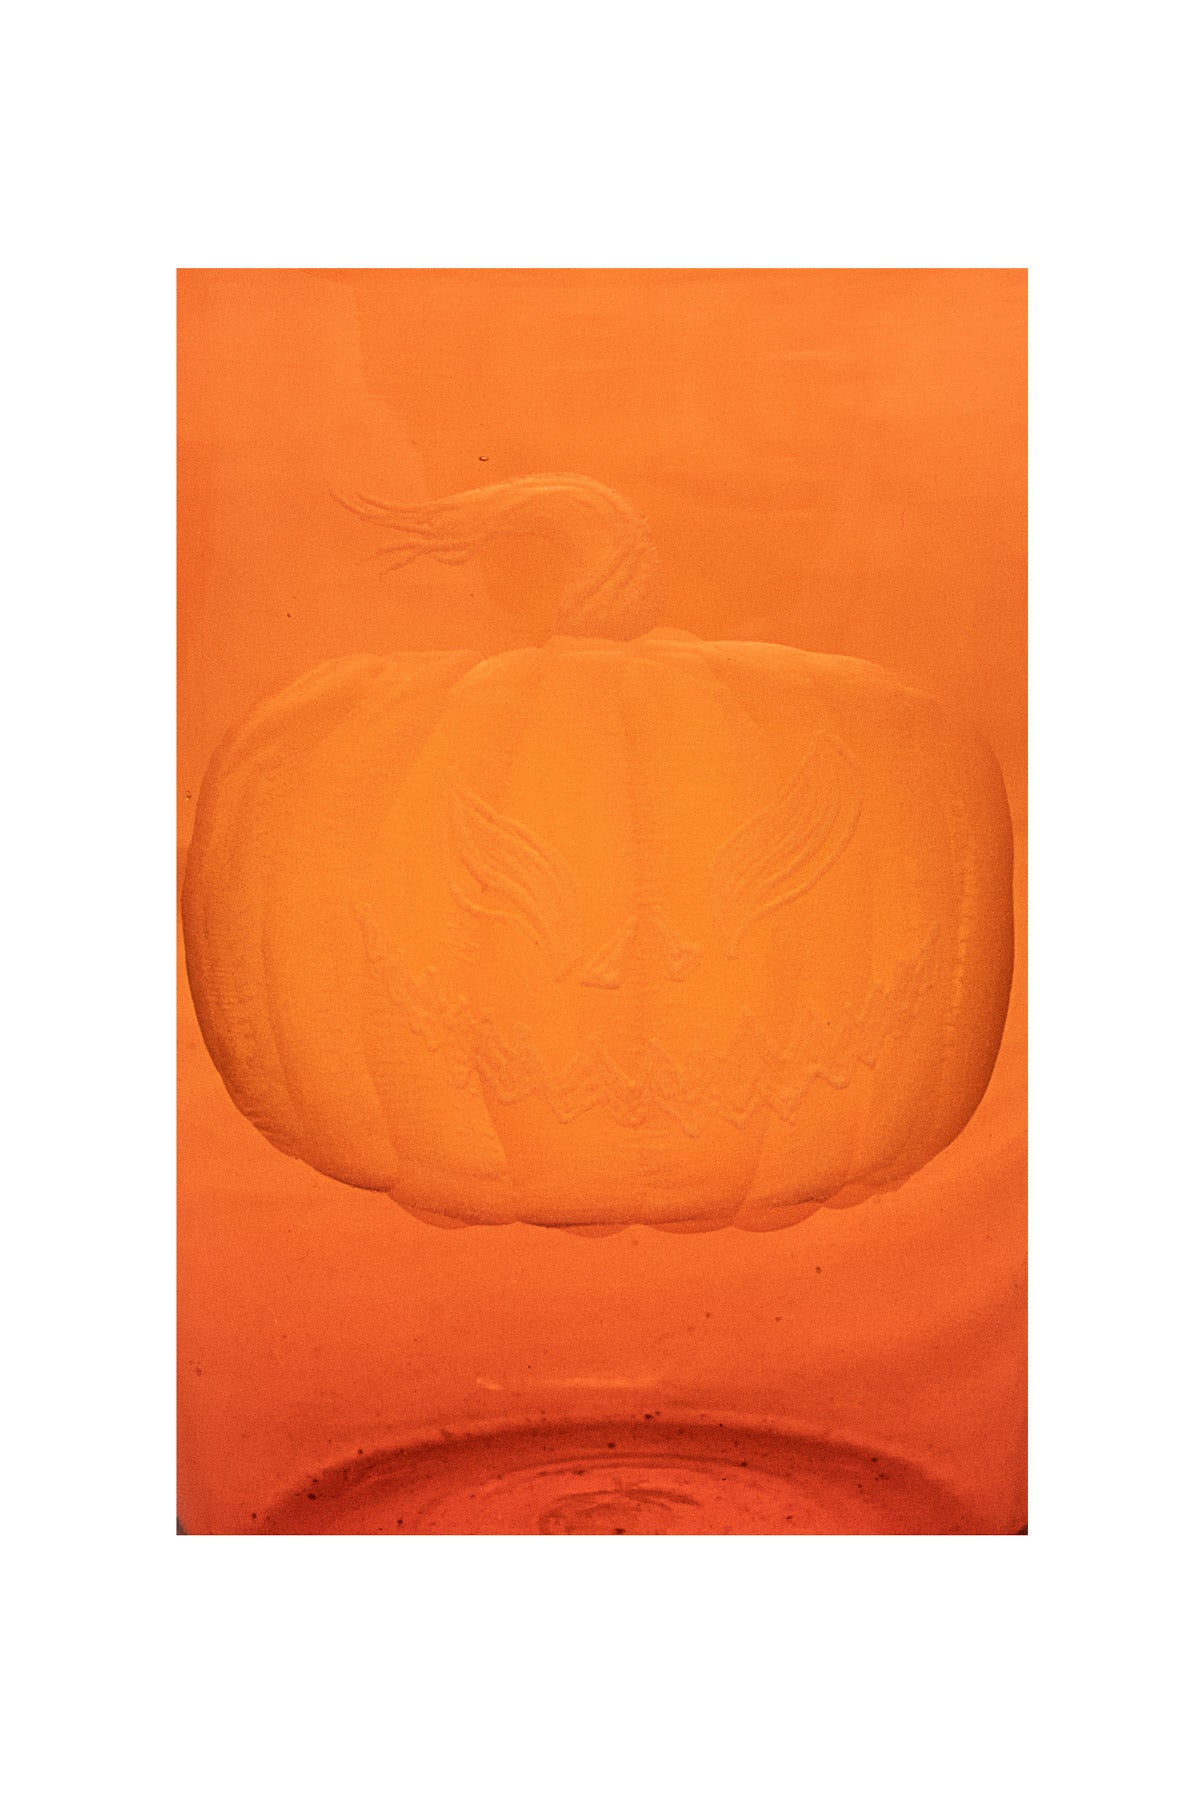 Vaso Glass- Pumpkin engraving